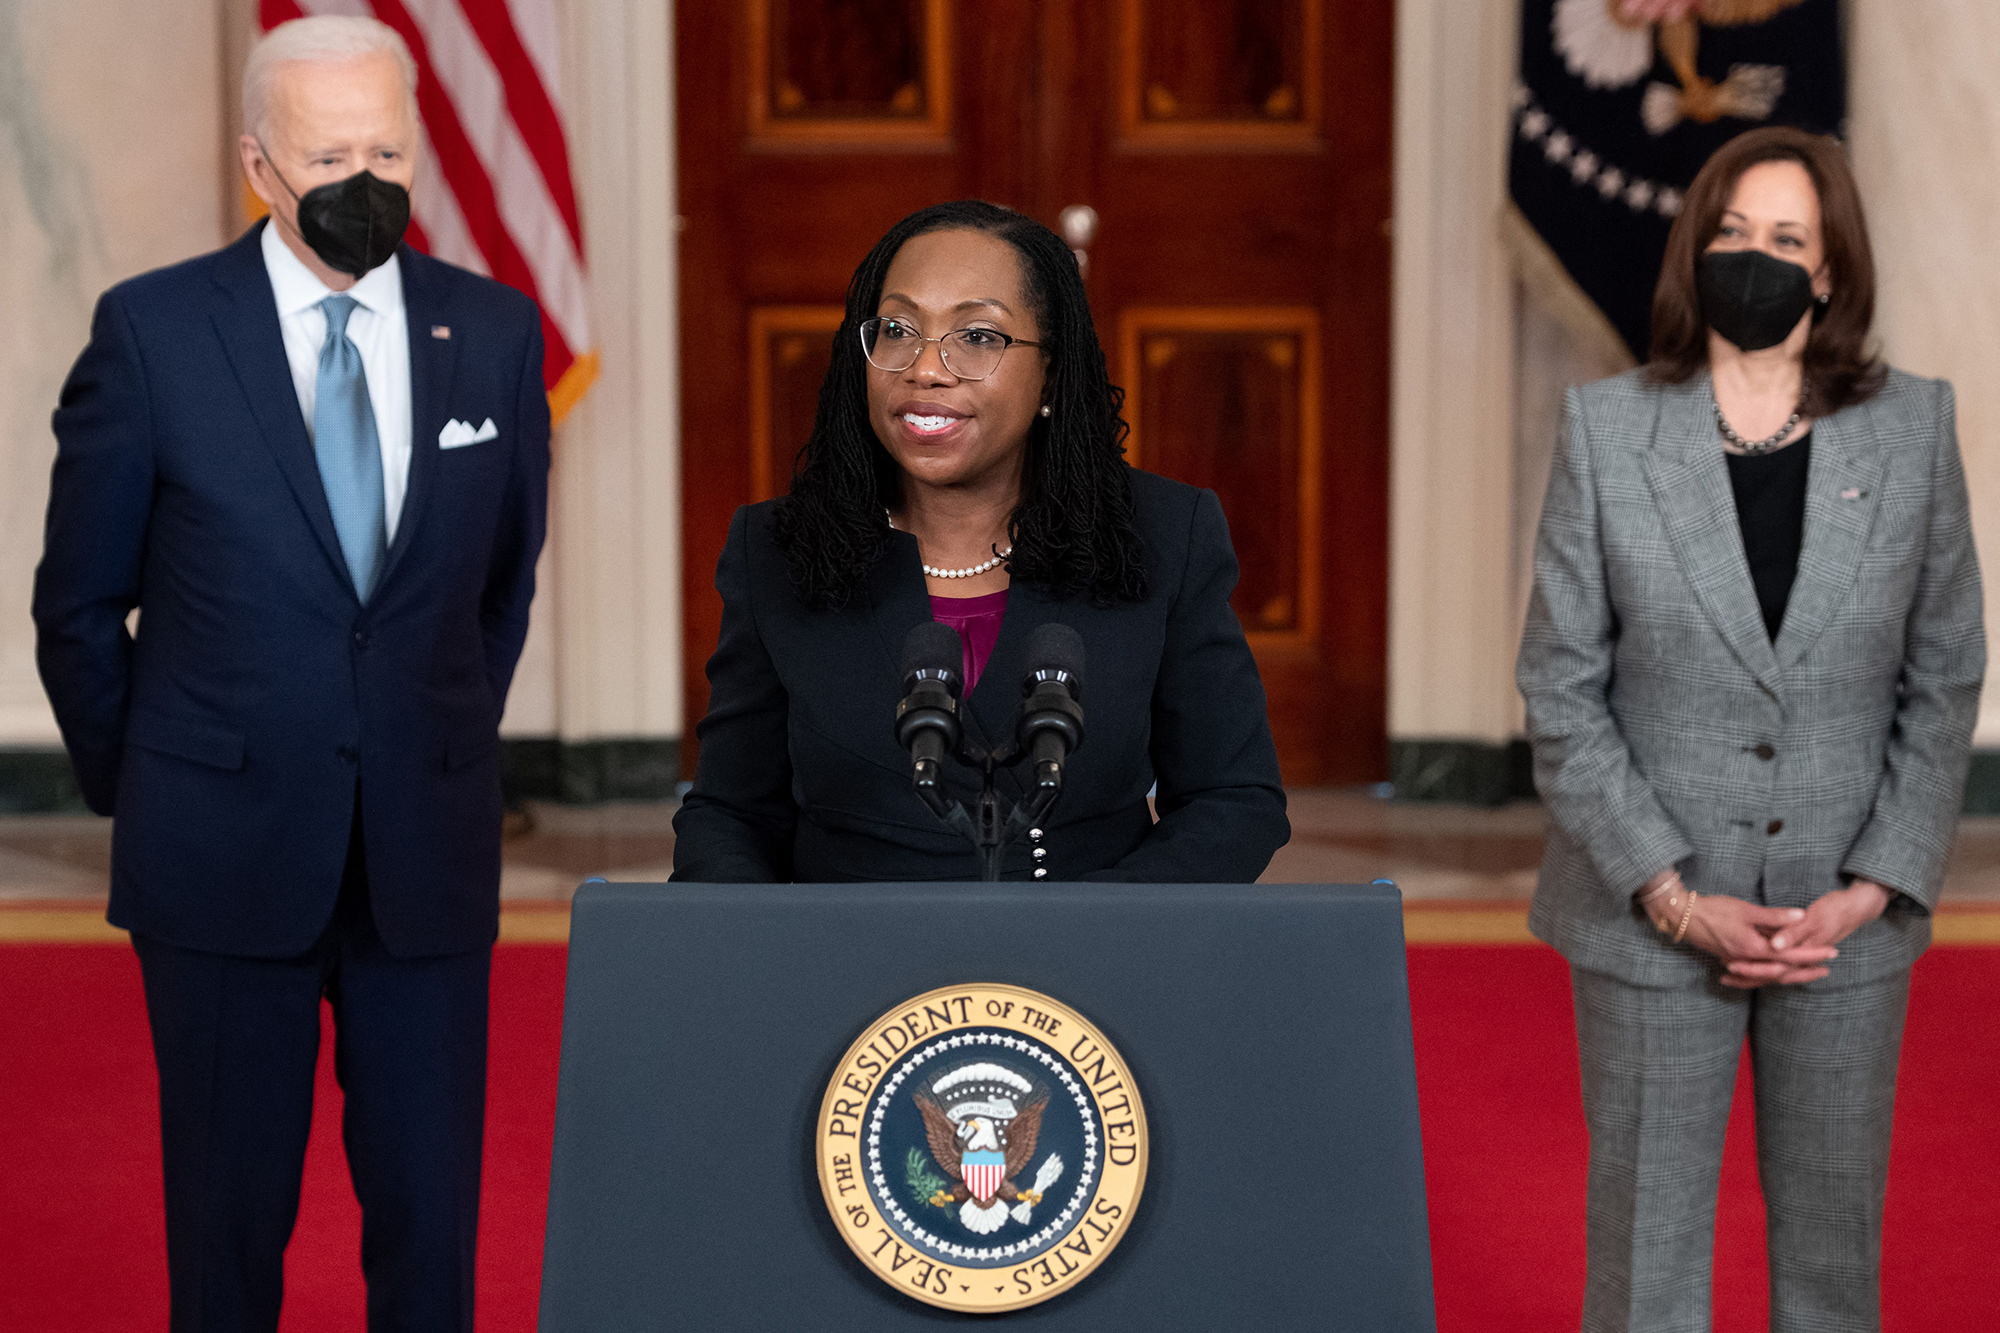 Judge Ketanji Brown Jackson speaks at the White House, alongside President Joe Biden and Vice President Kamala Harris, on February 25.